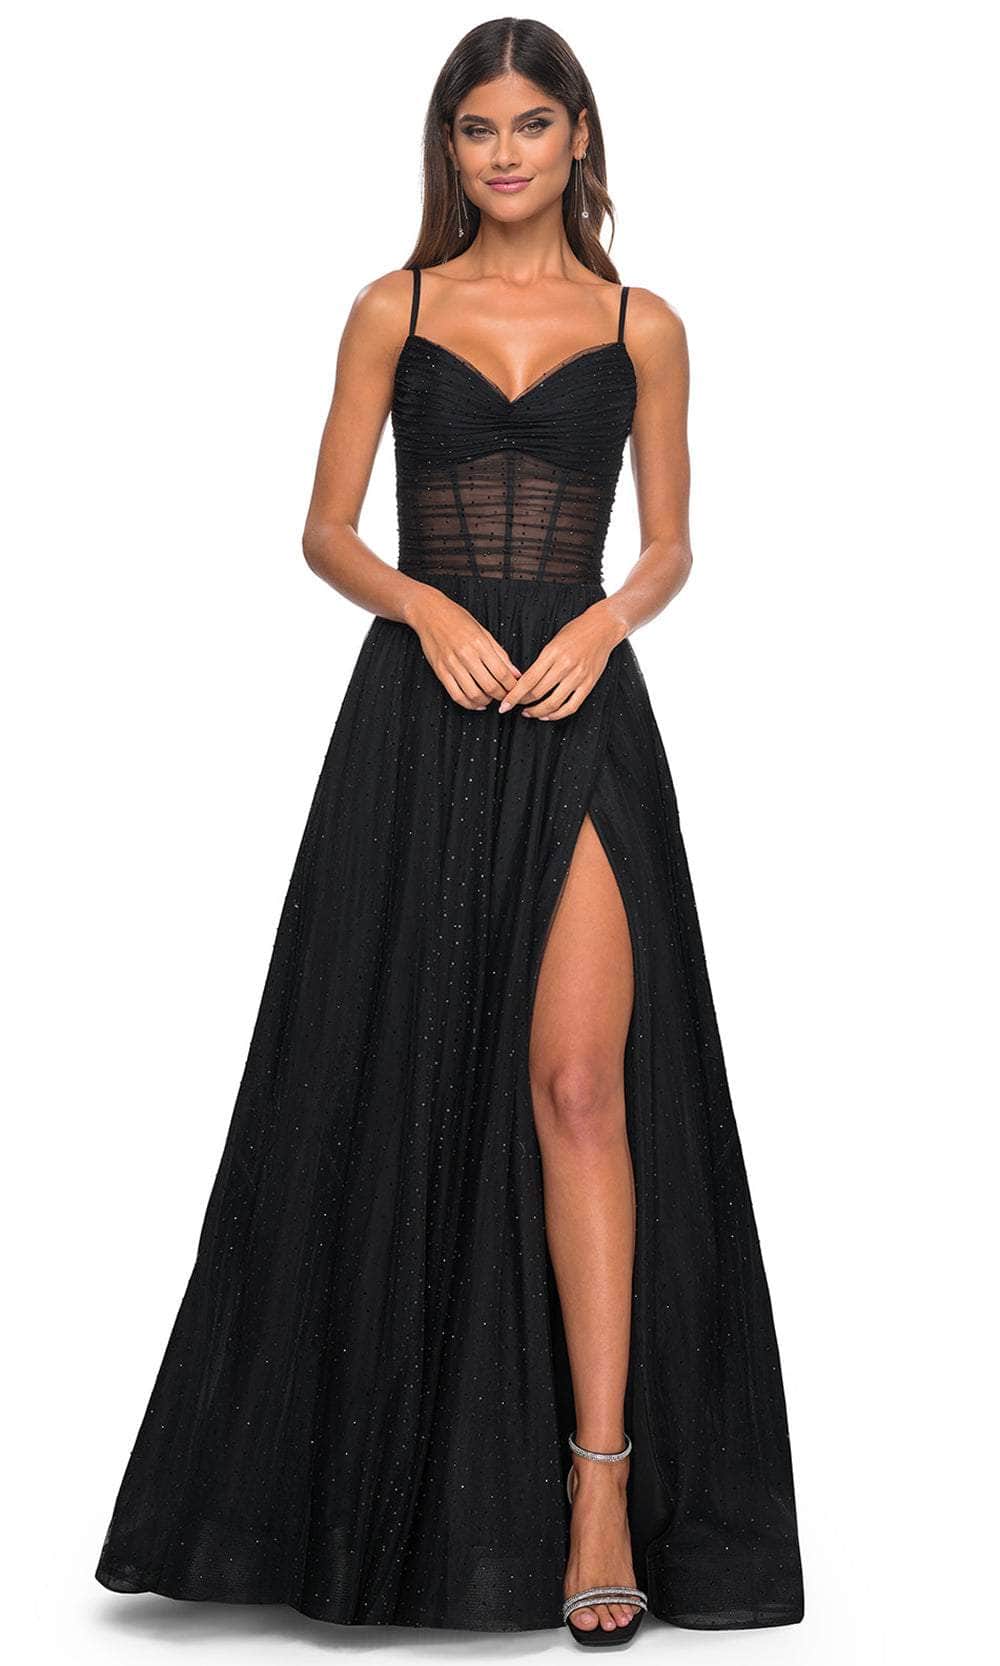 La Femme 31970 - Ruched Tulle Prom Dress
